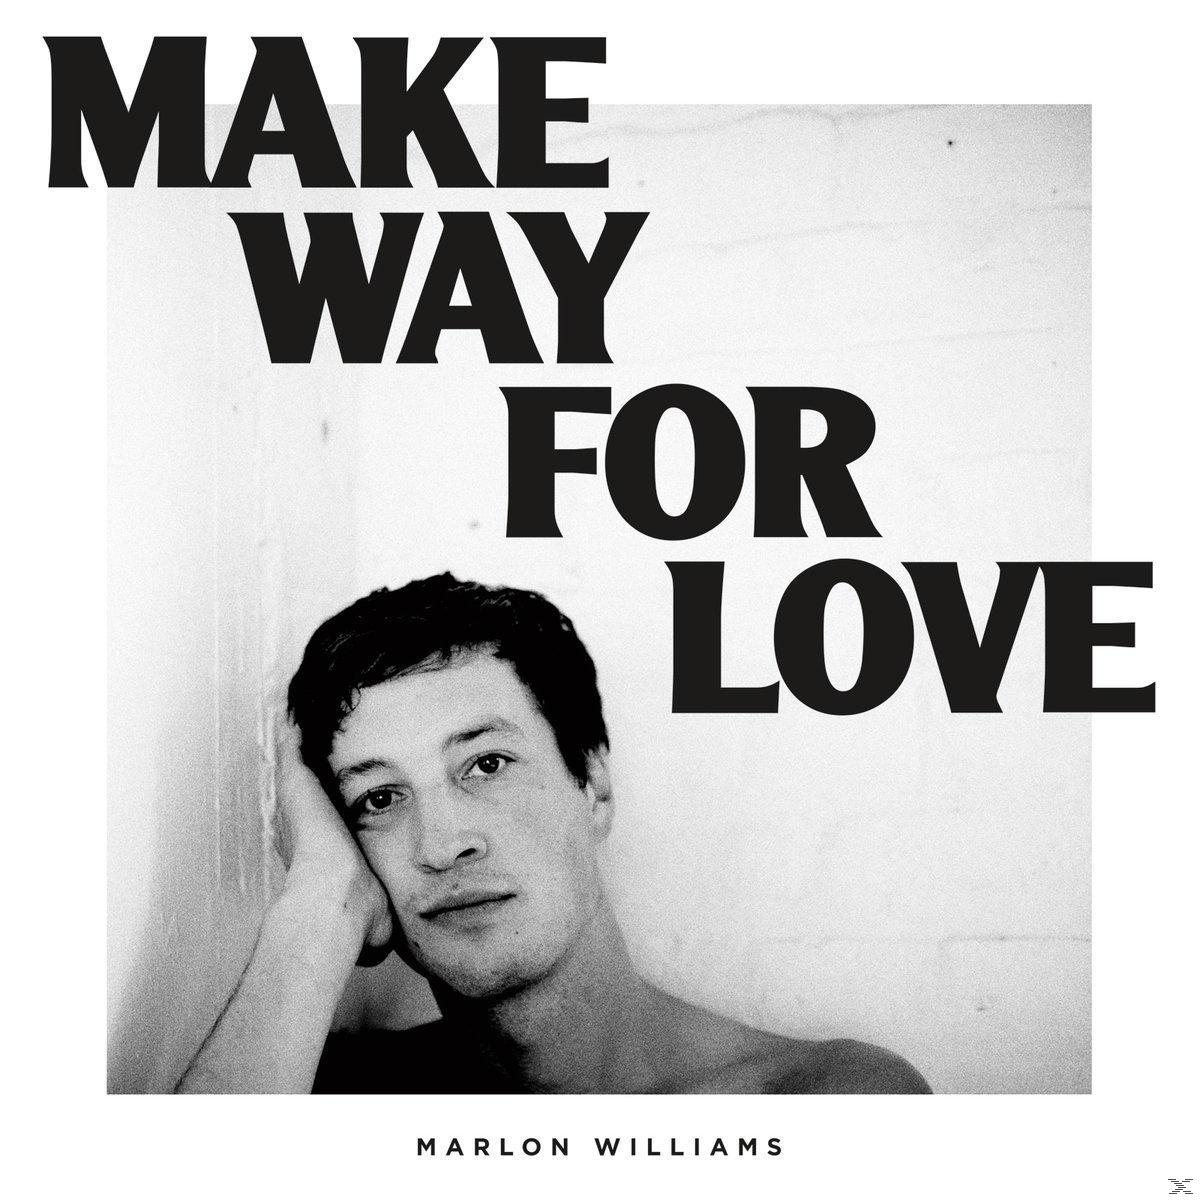 (CD) Love Marlon Way For Make - Williams -